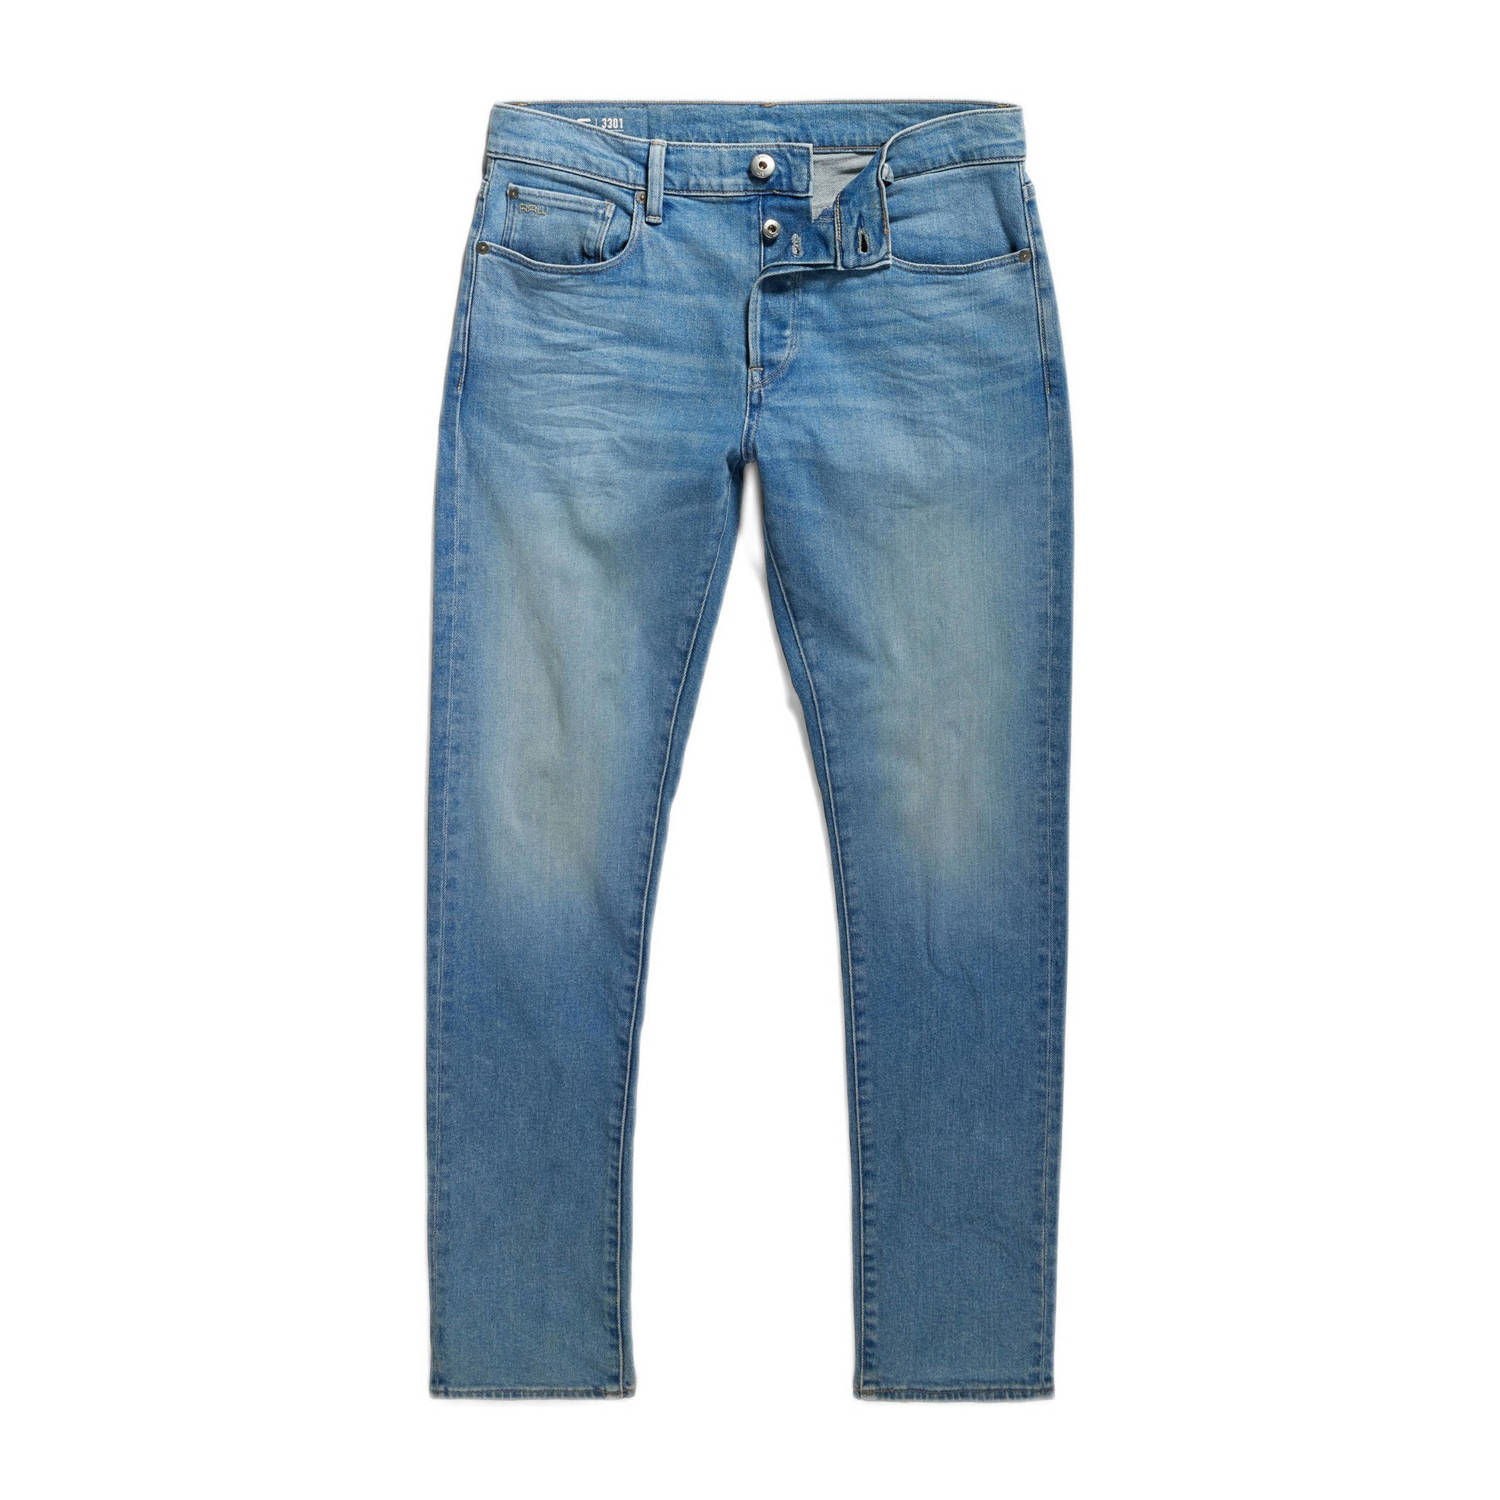 G-Star RAW 3301 slim fit jeans sun faded waterside